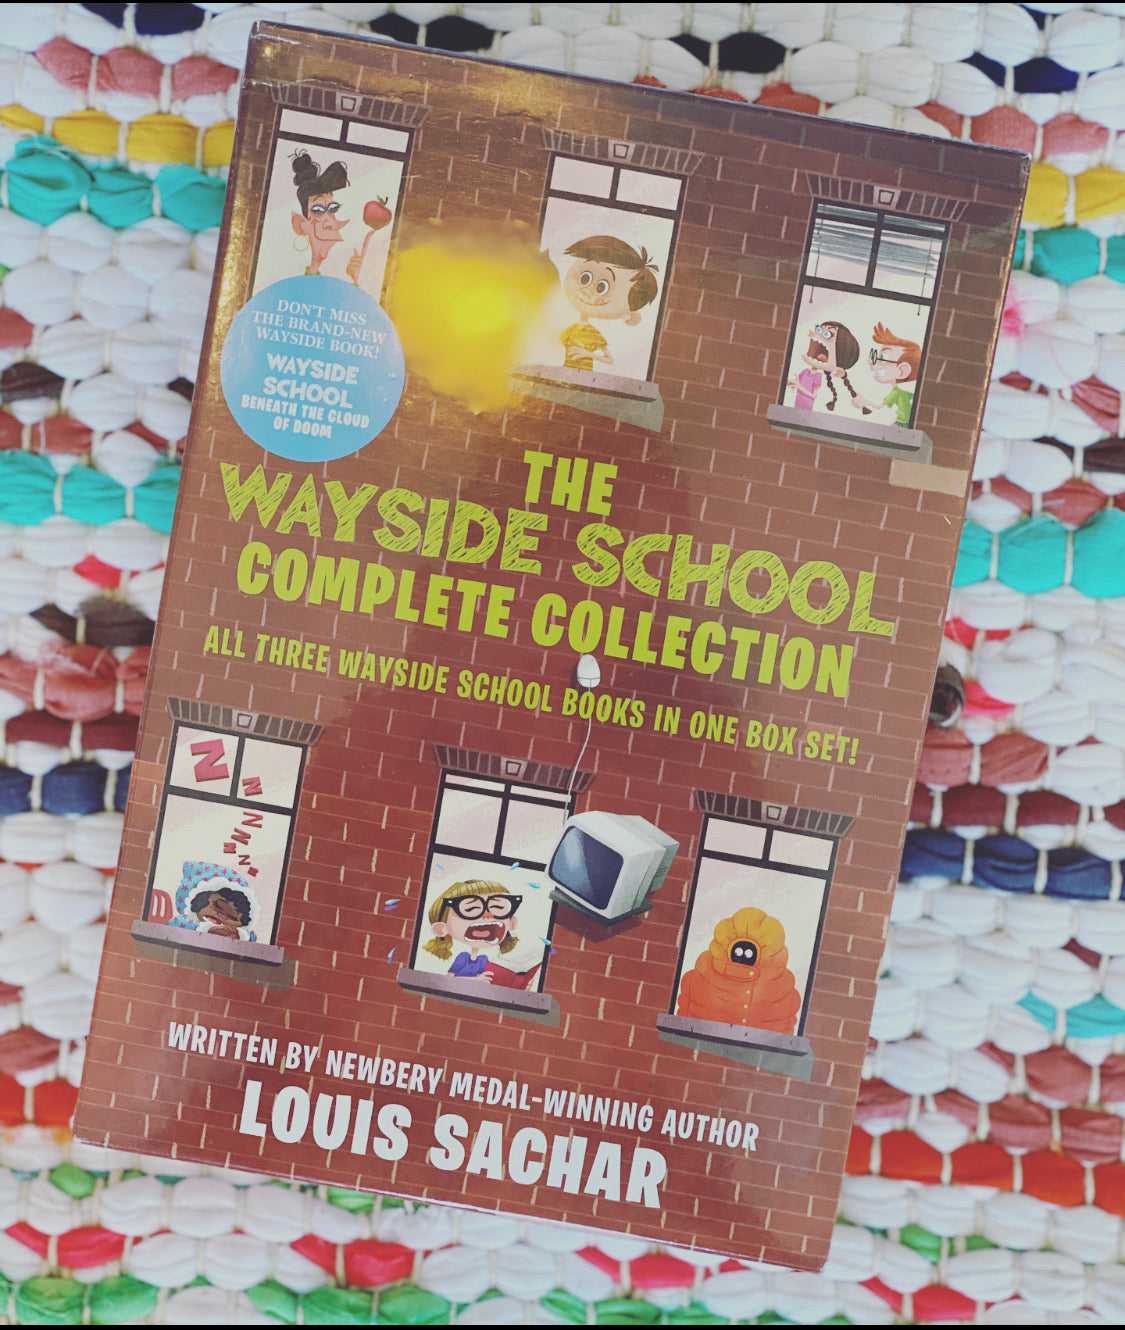 Wayside School 3-Book Collection eBook by Louis Sachar - EPUB Book